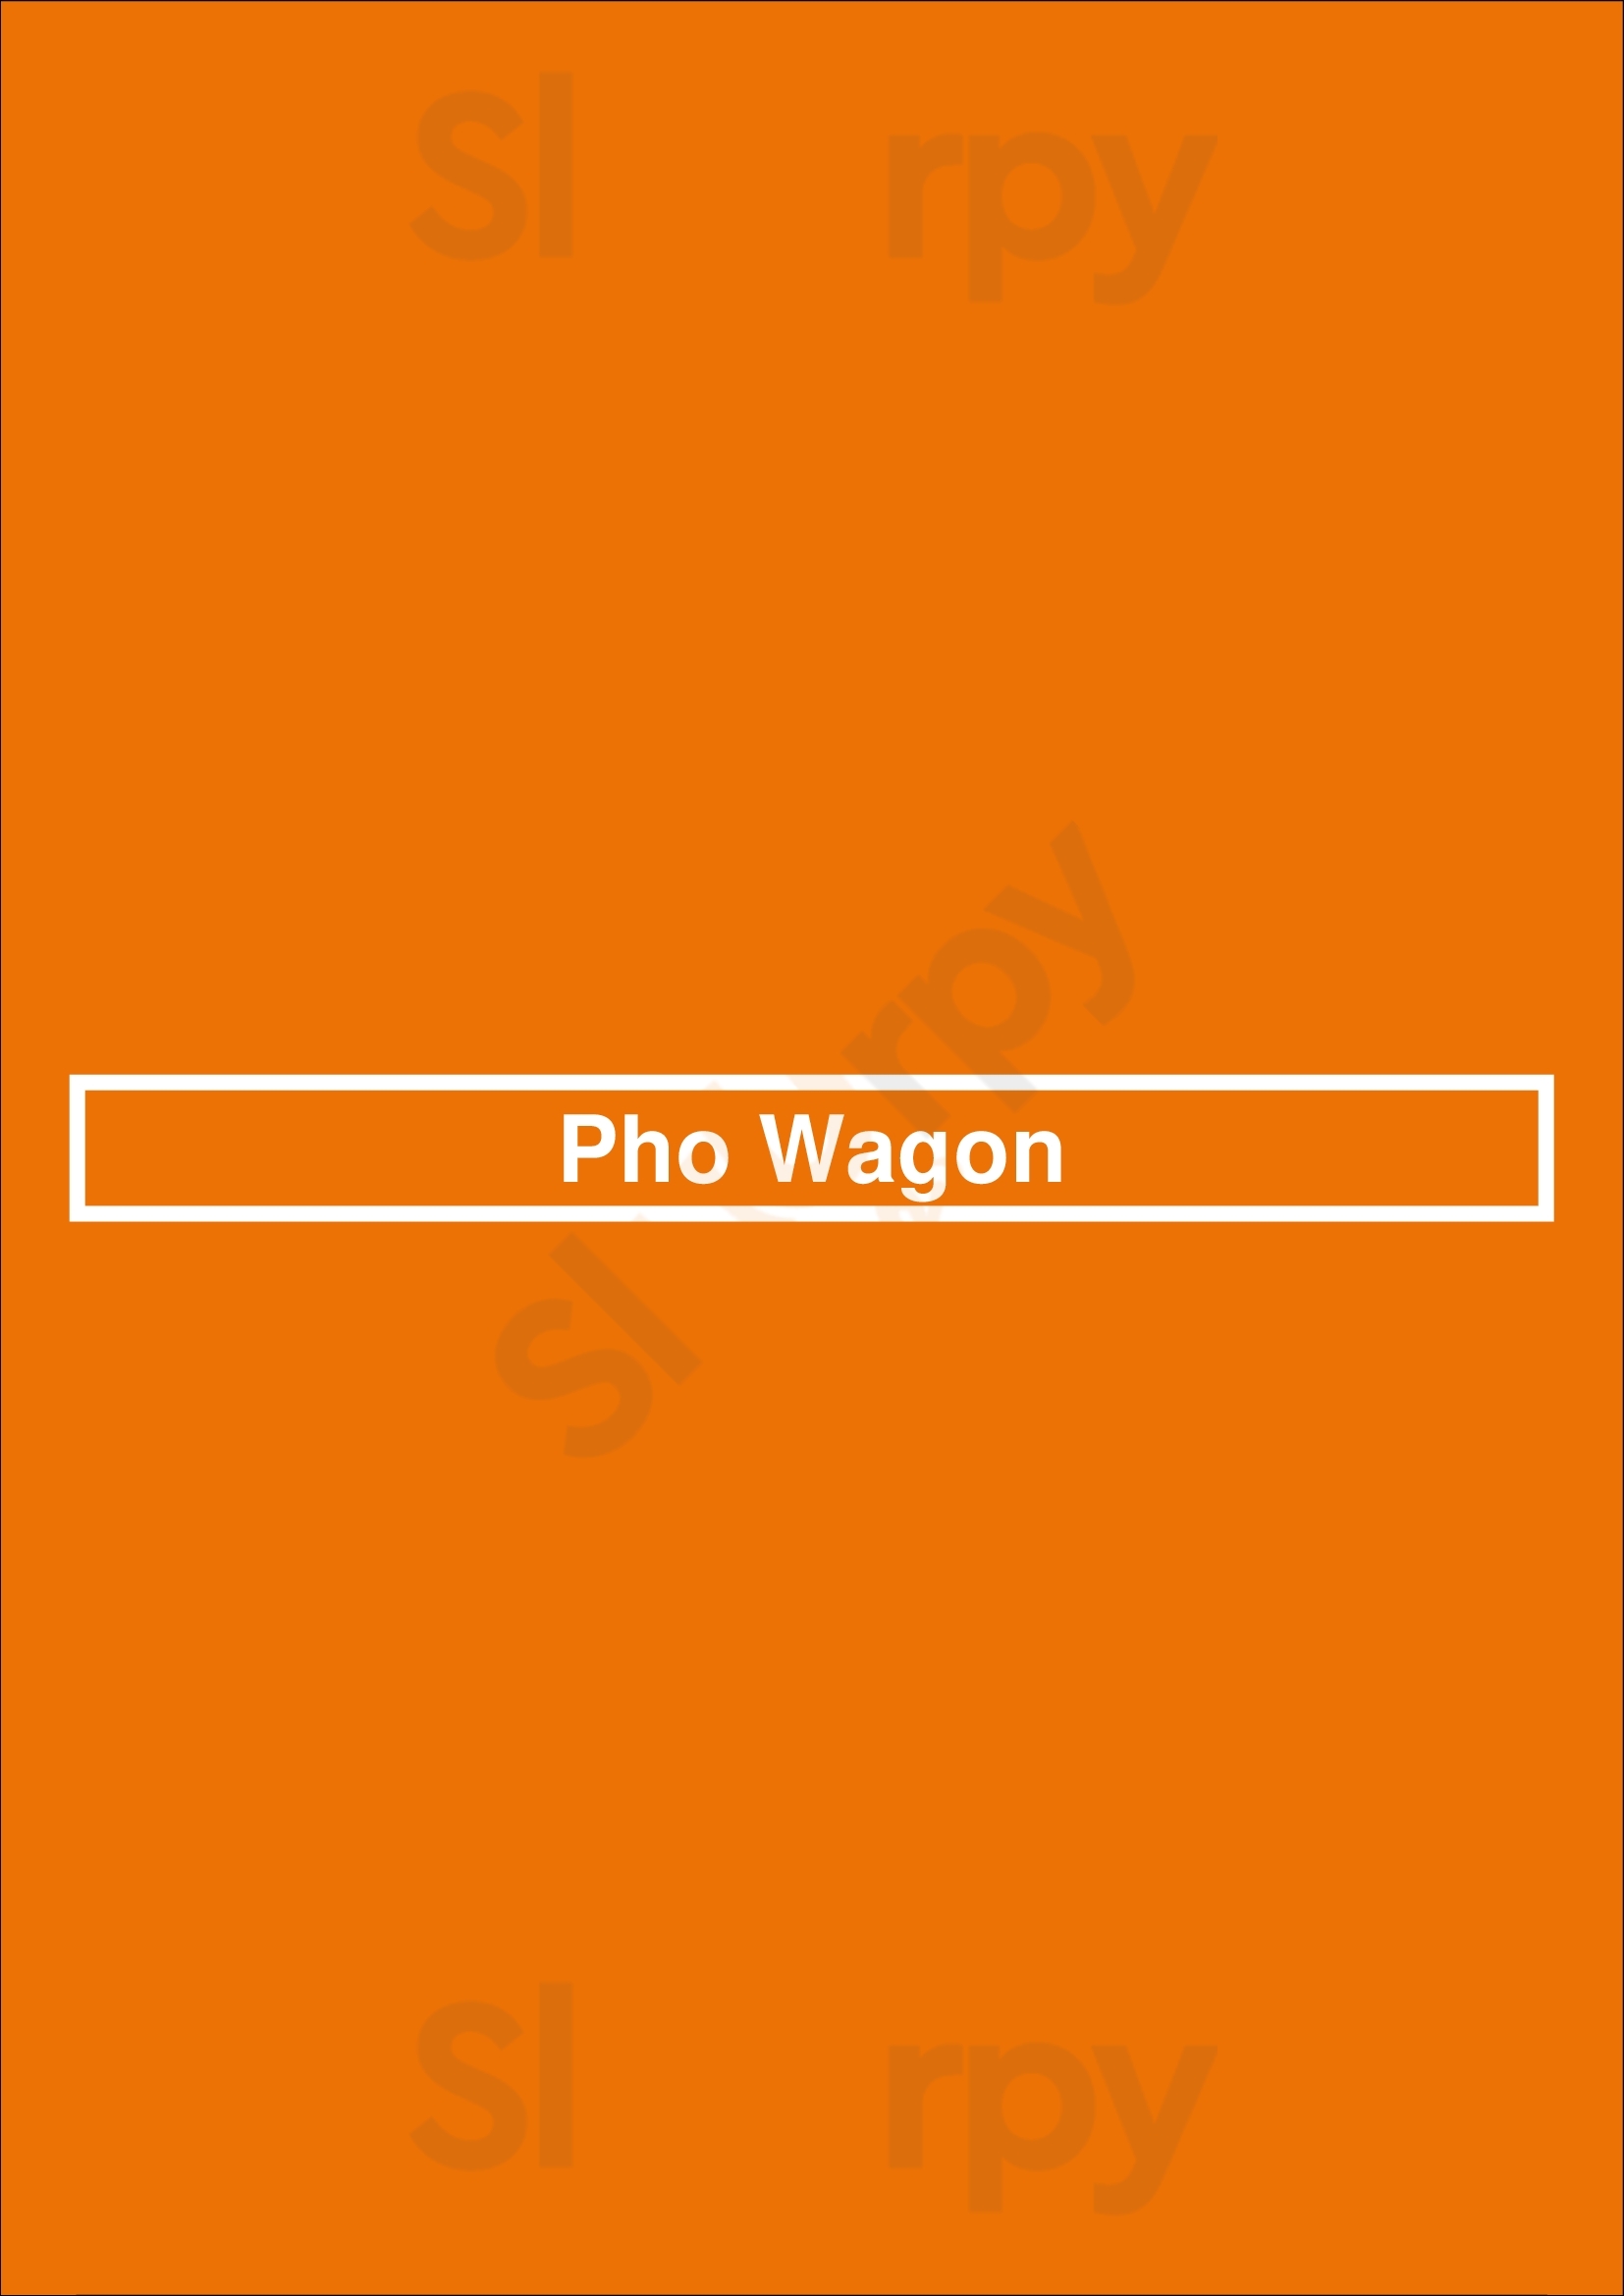 Pho Wagon San Jose Menu - 1